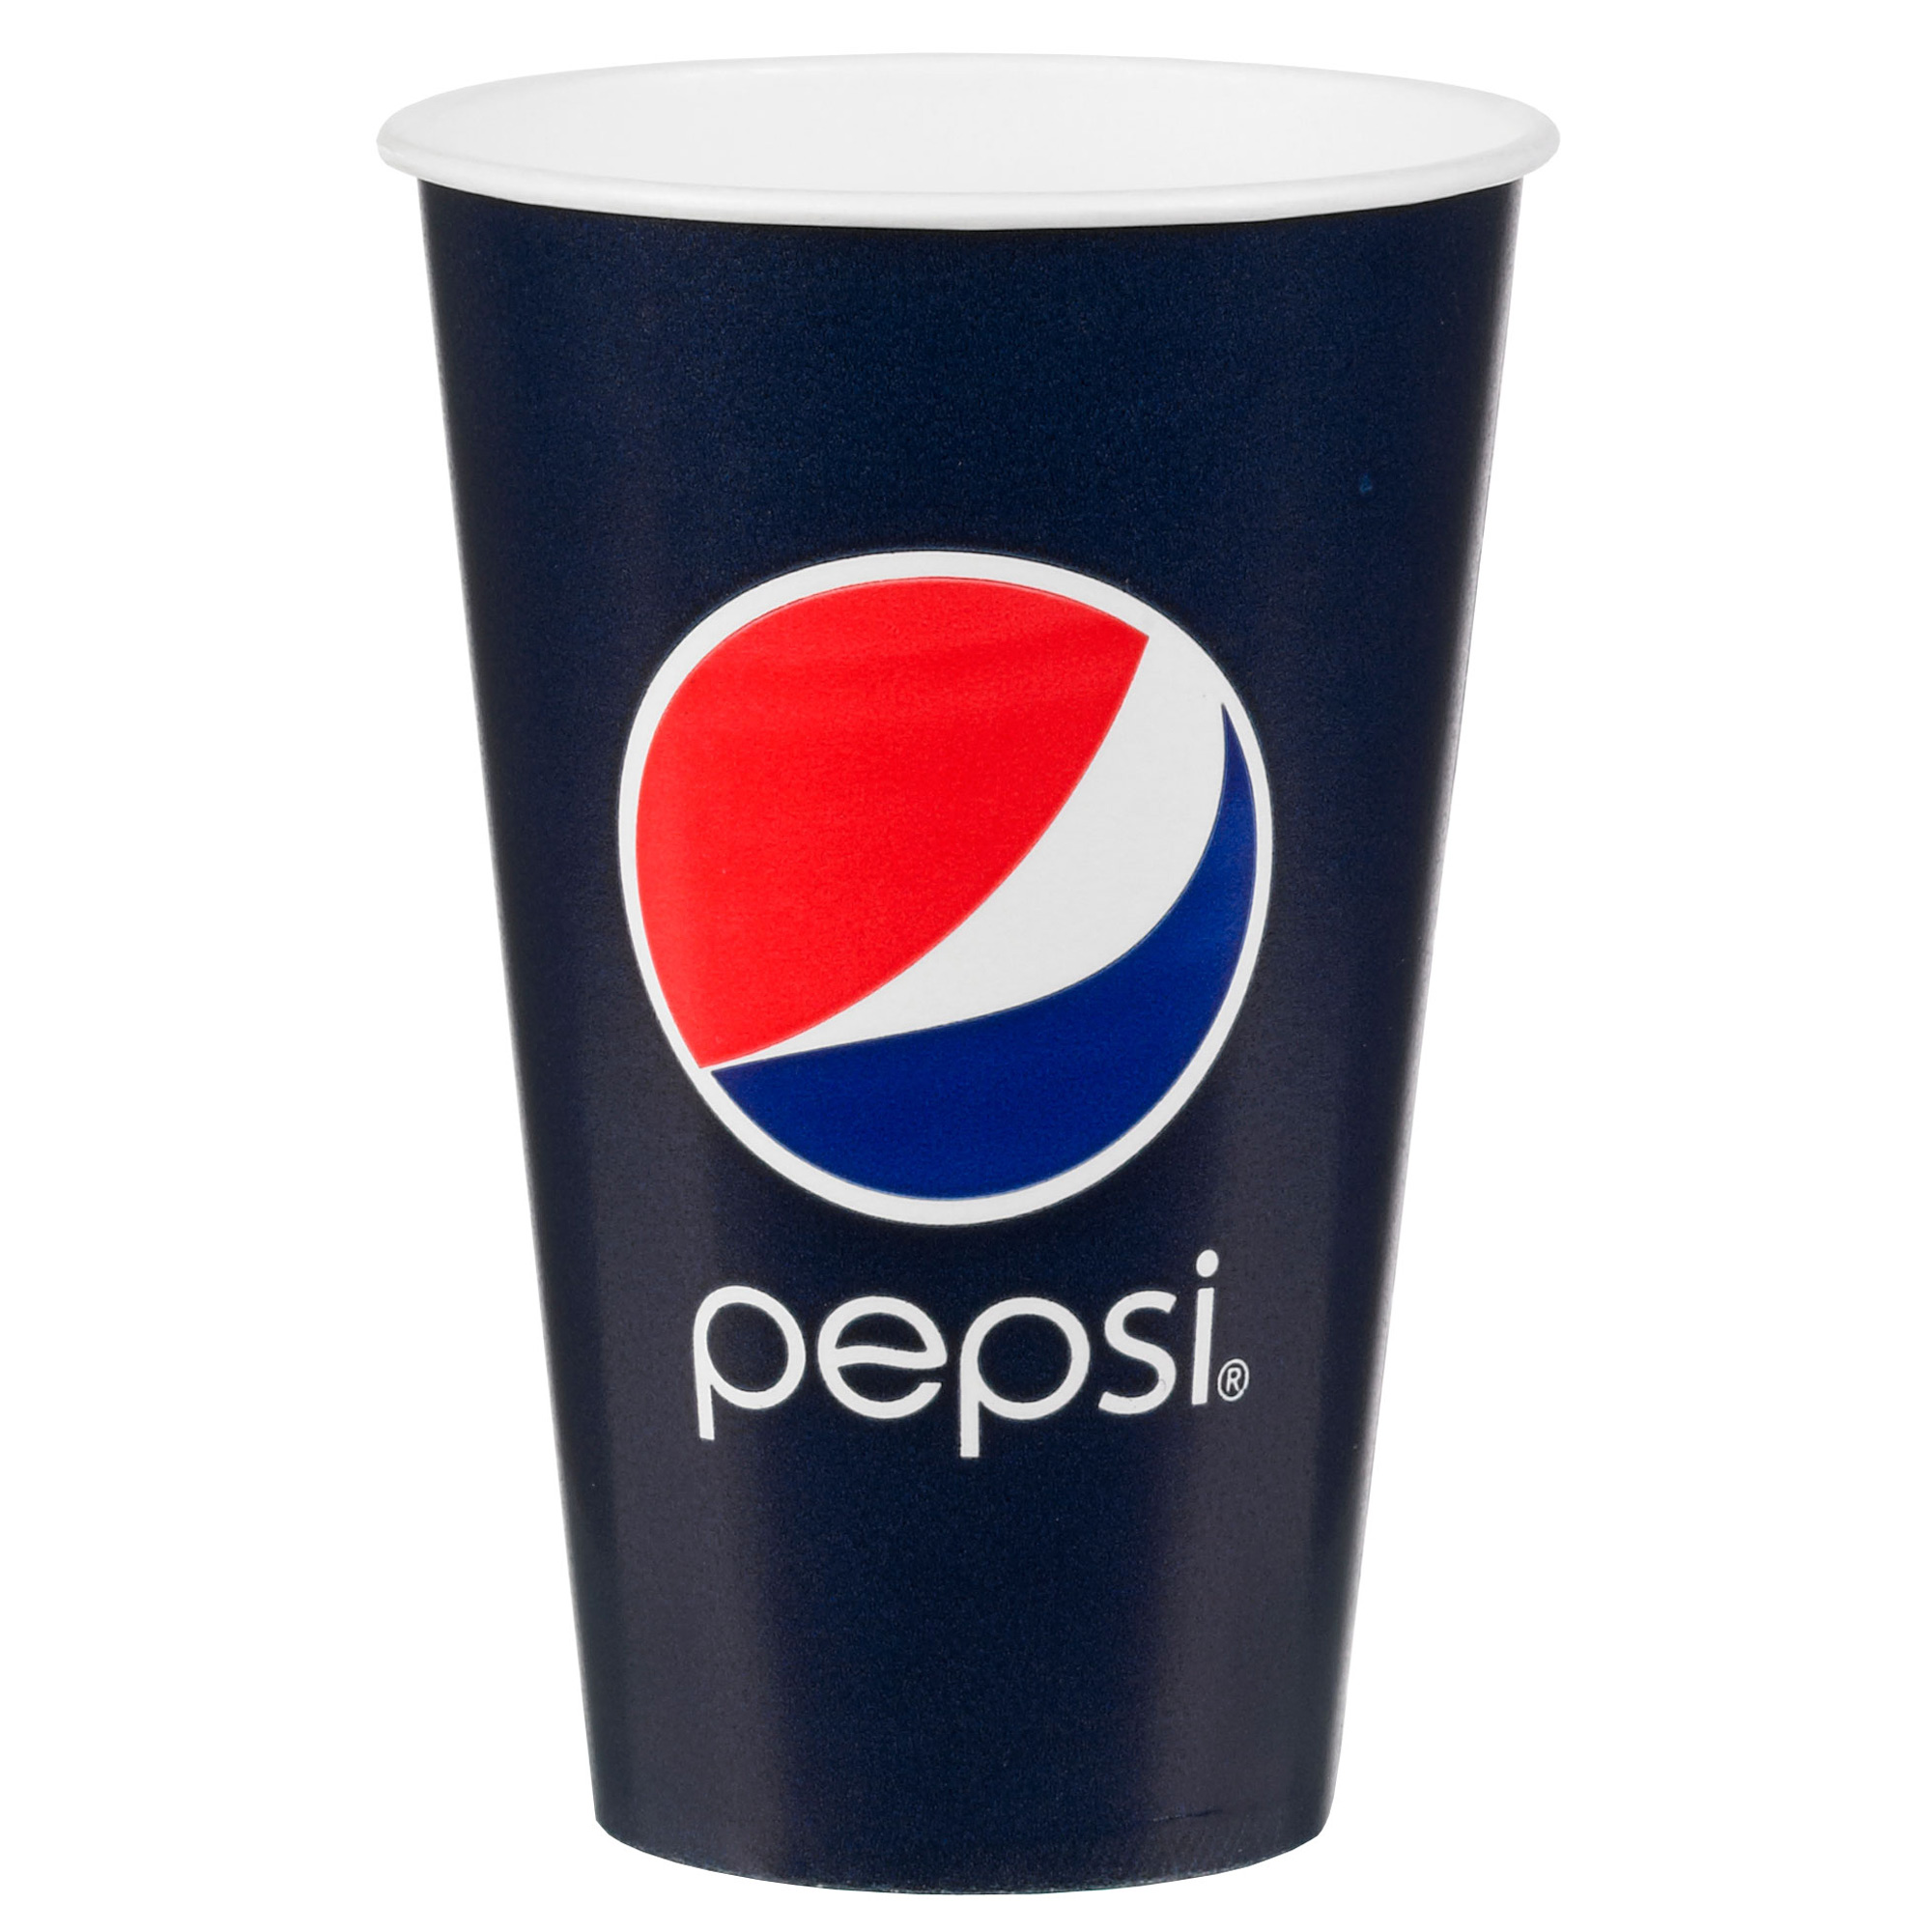 Pepsi Paper Cups 12oz / 340ml at drinsktuff